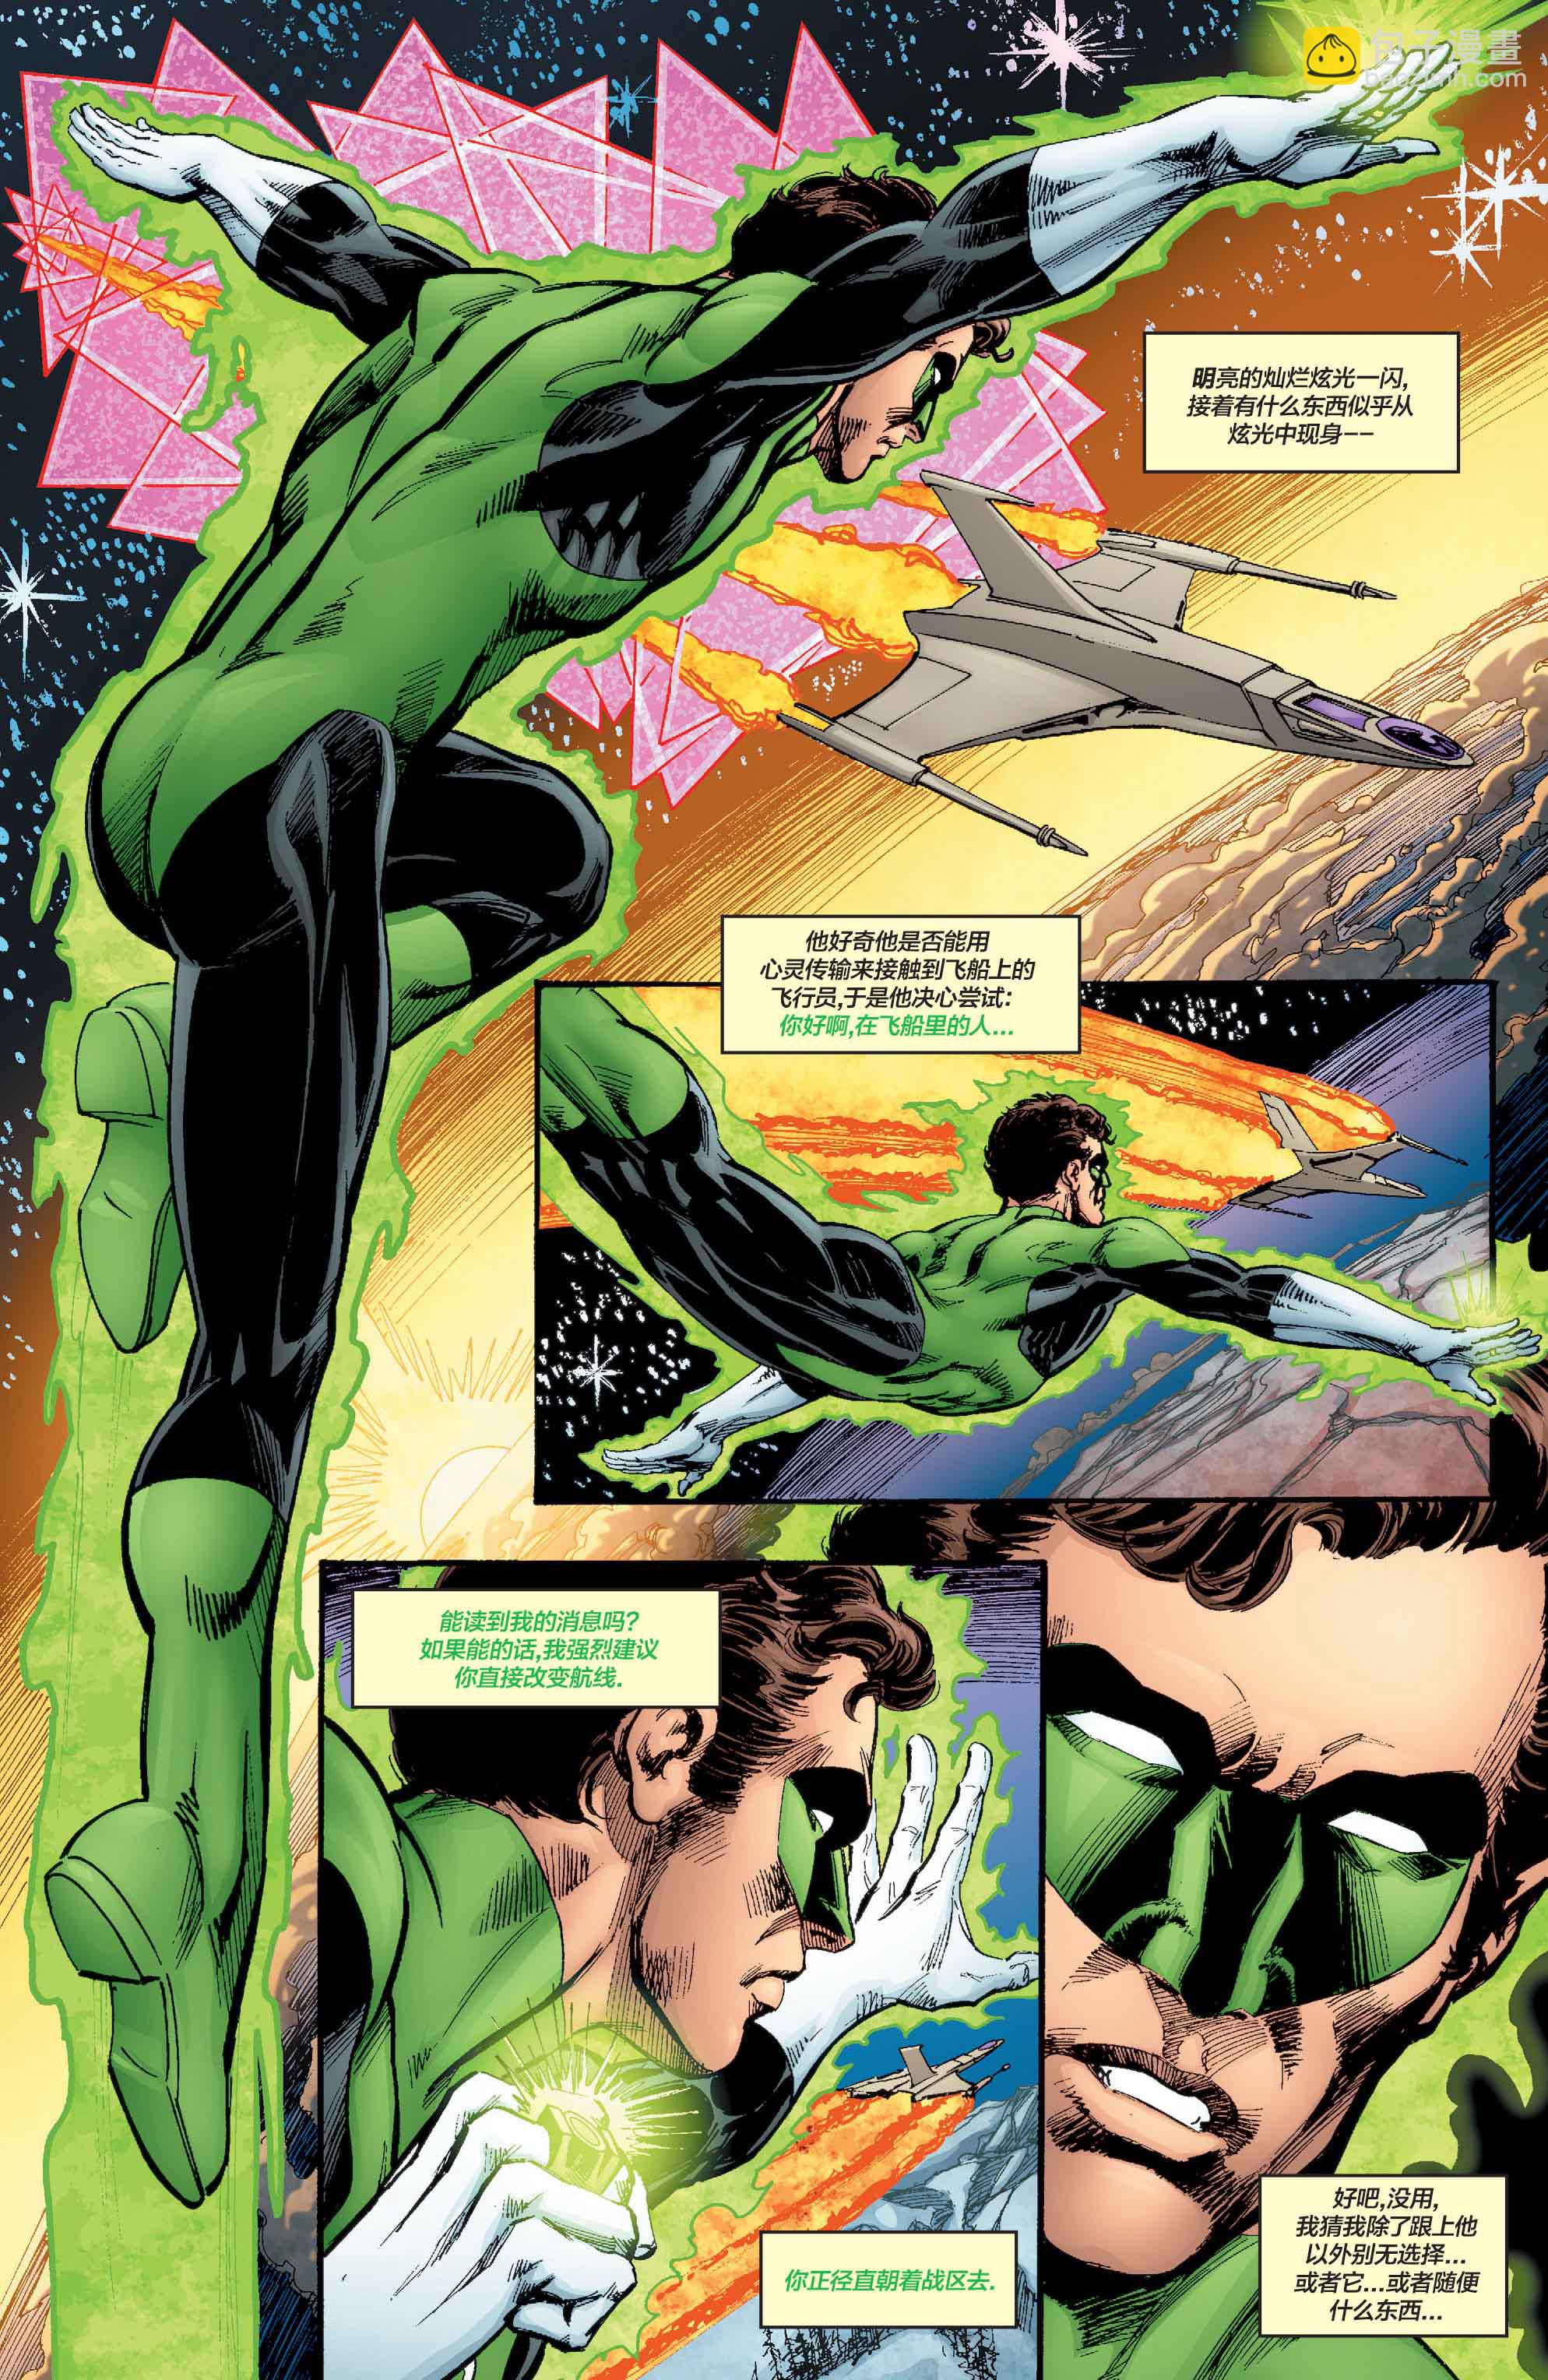 DC-追溯經典 - 綠燈俠-70年代 - 1